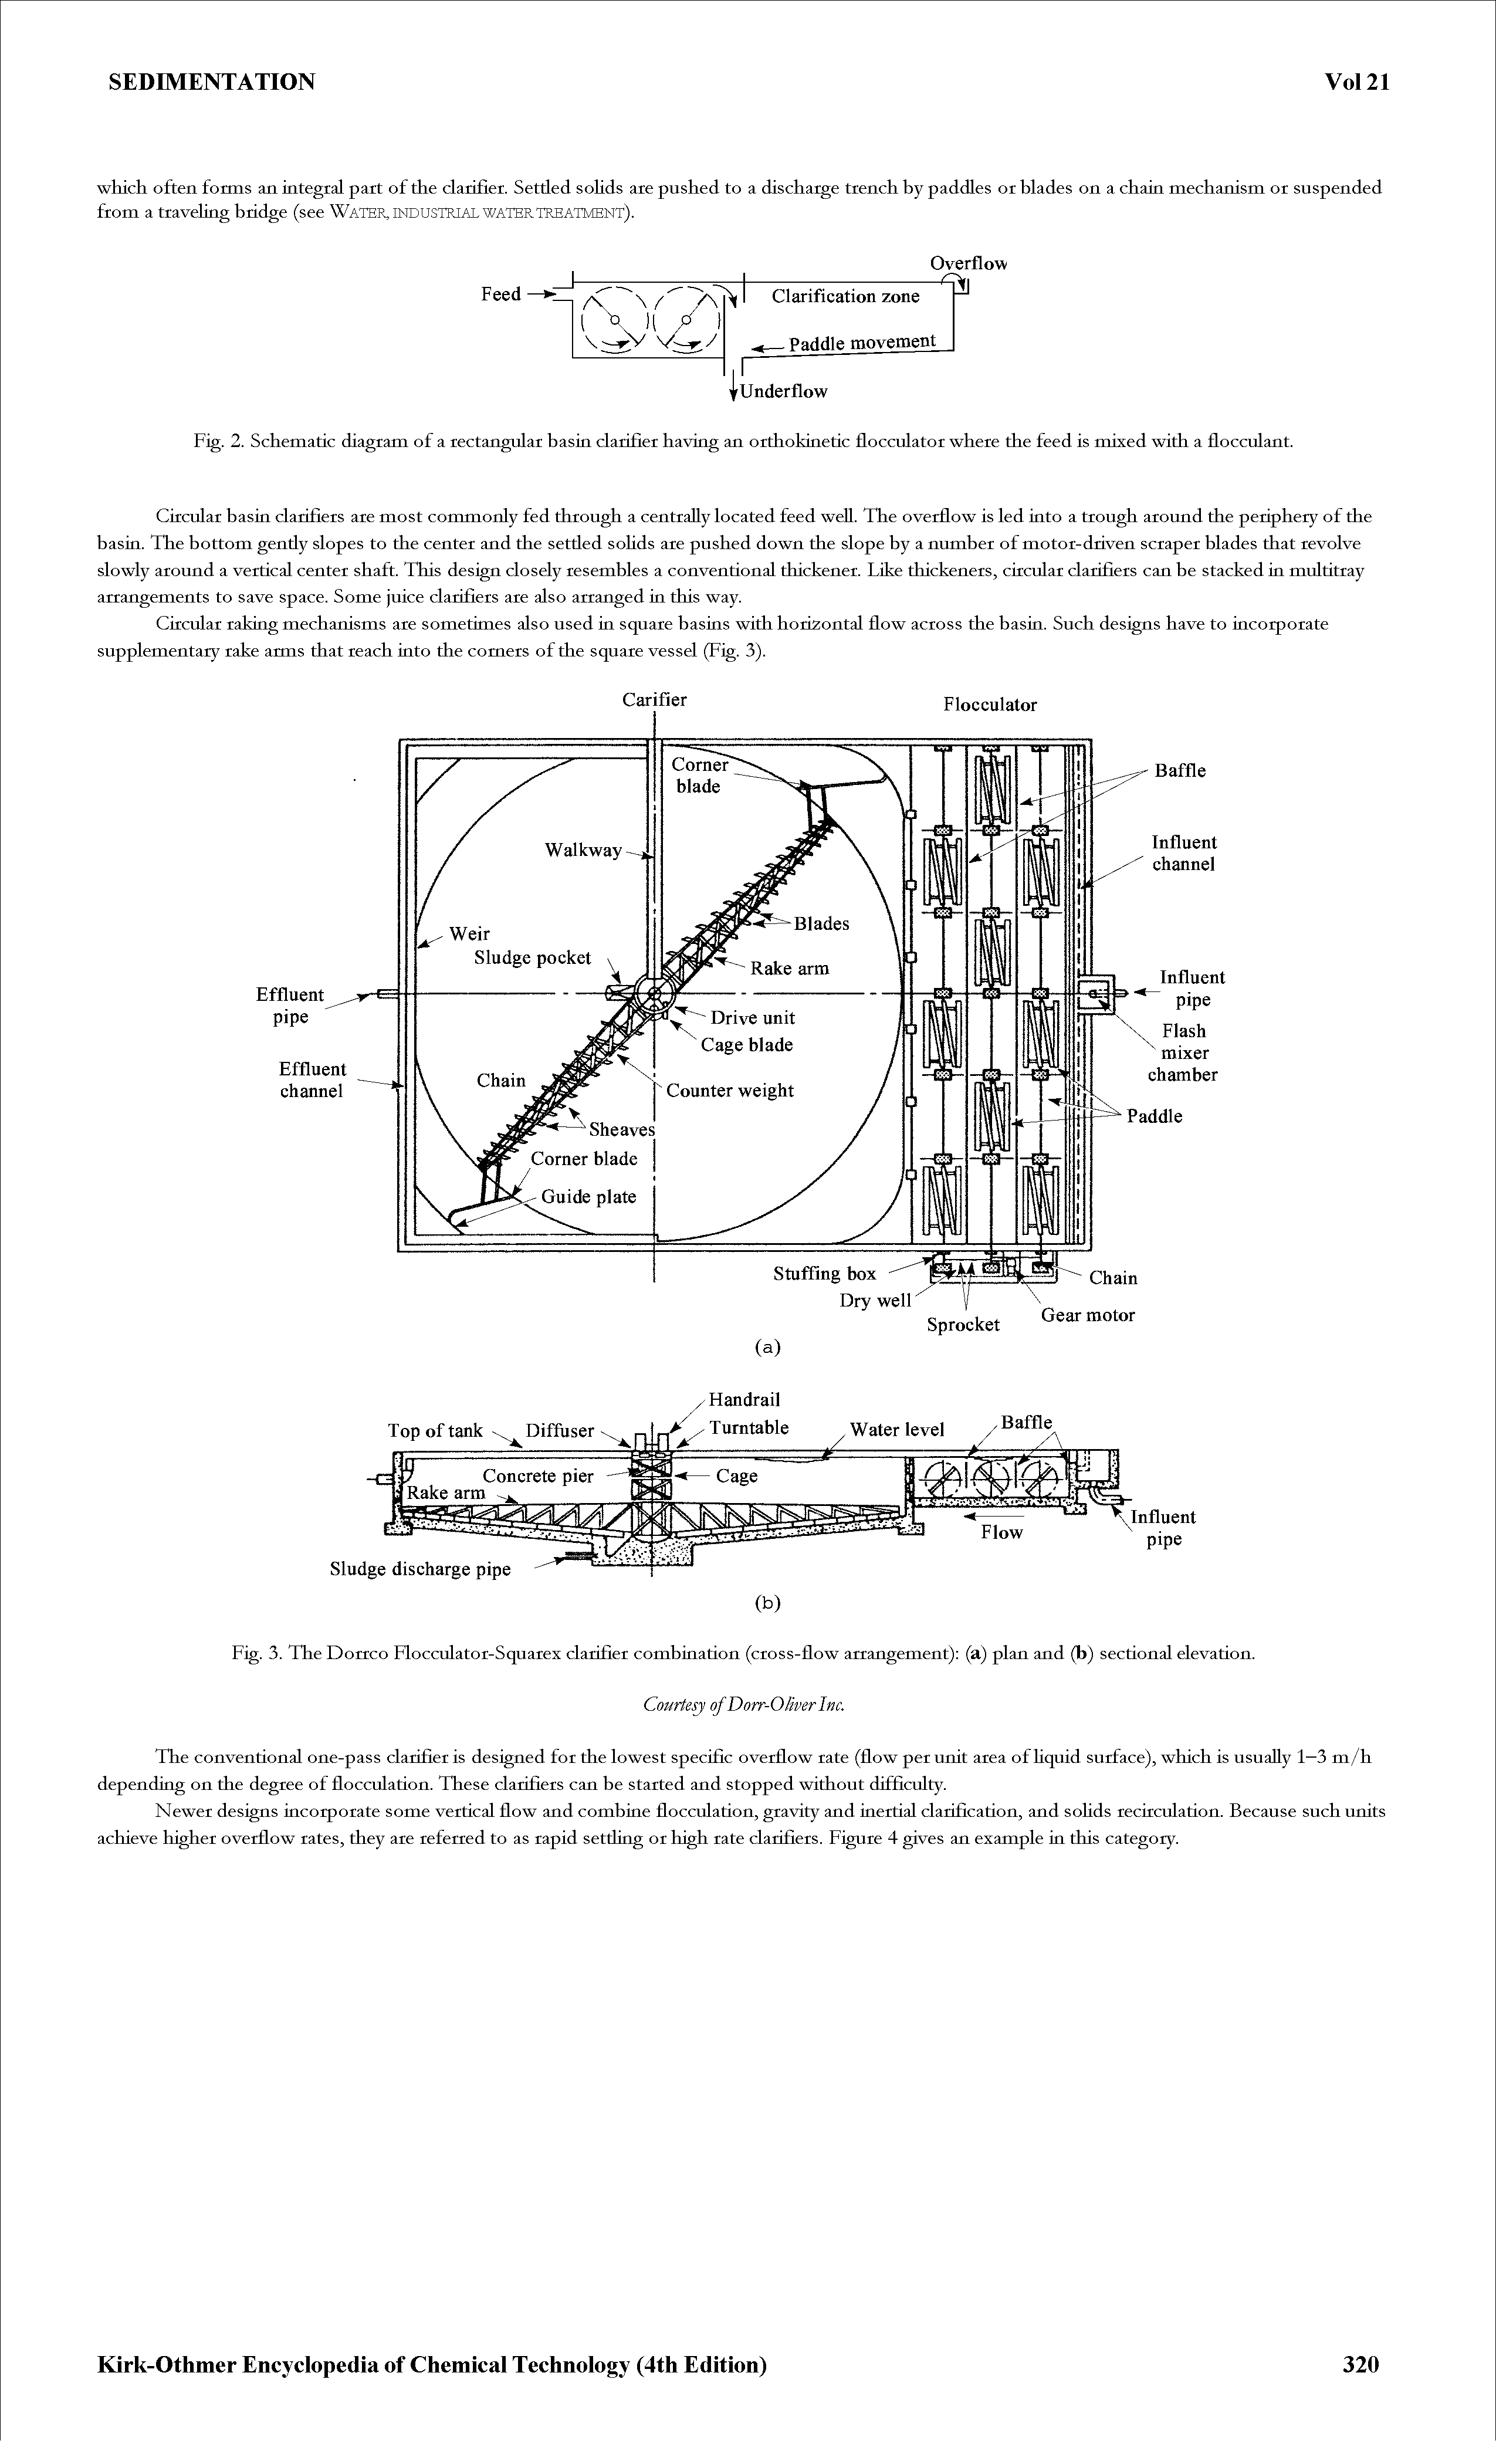 Fig. 3. The Dorrco Flocculator-Squarex clarifier combination (cross-flow arrangement) (a) plan and (b) sectional elevation.